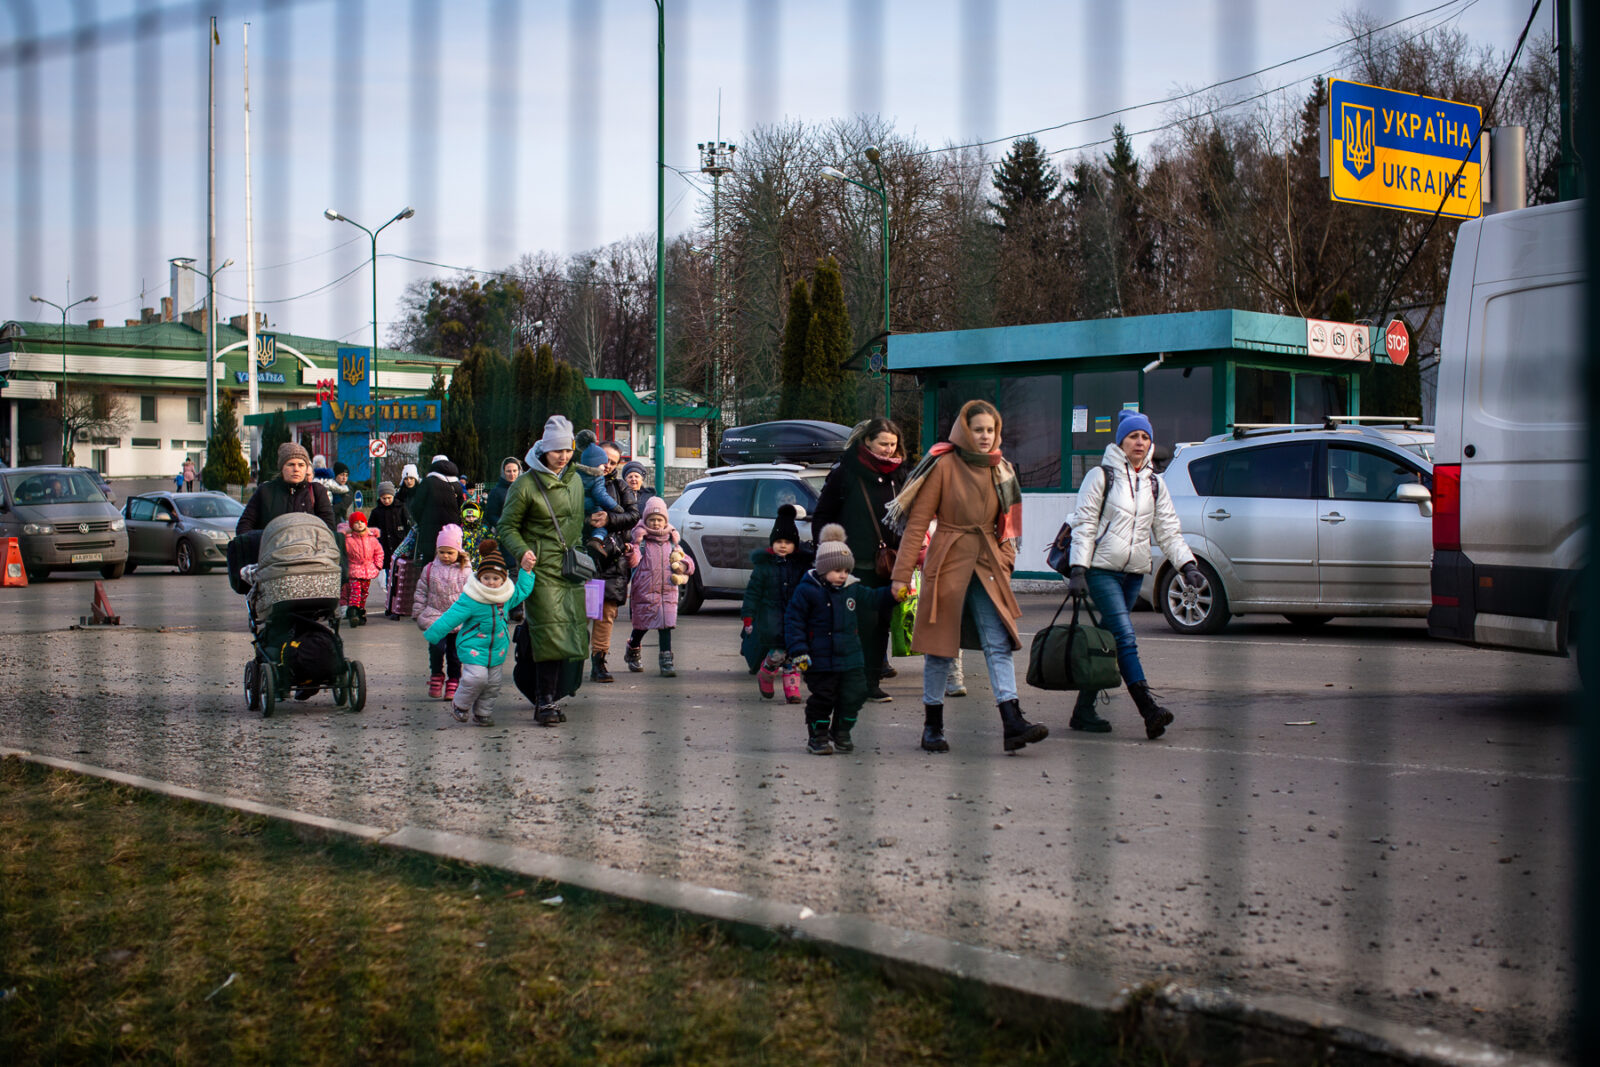 Ukrainian refugees crossing the border into Medyka, Poland